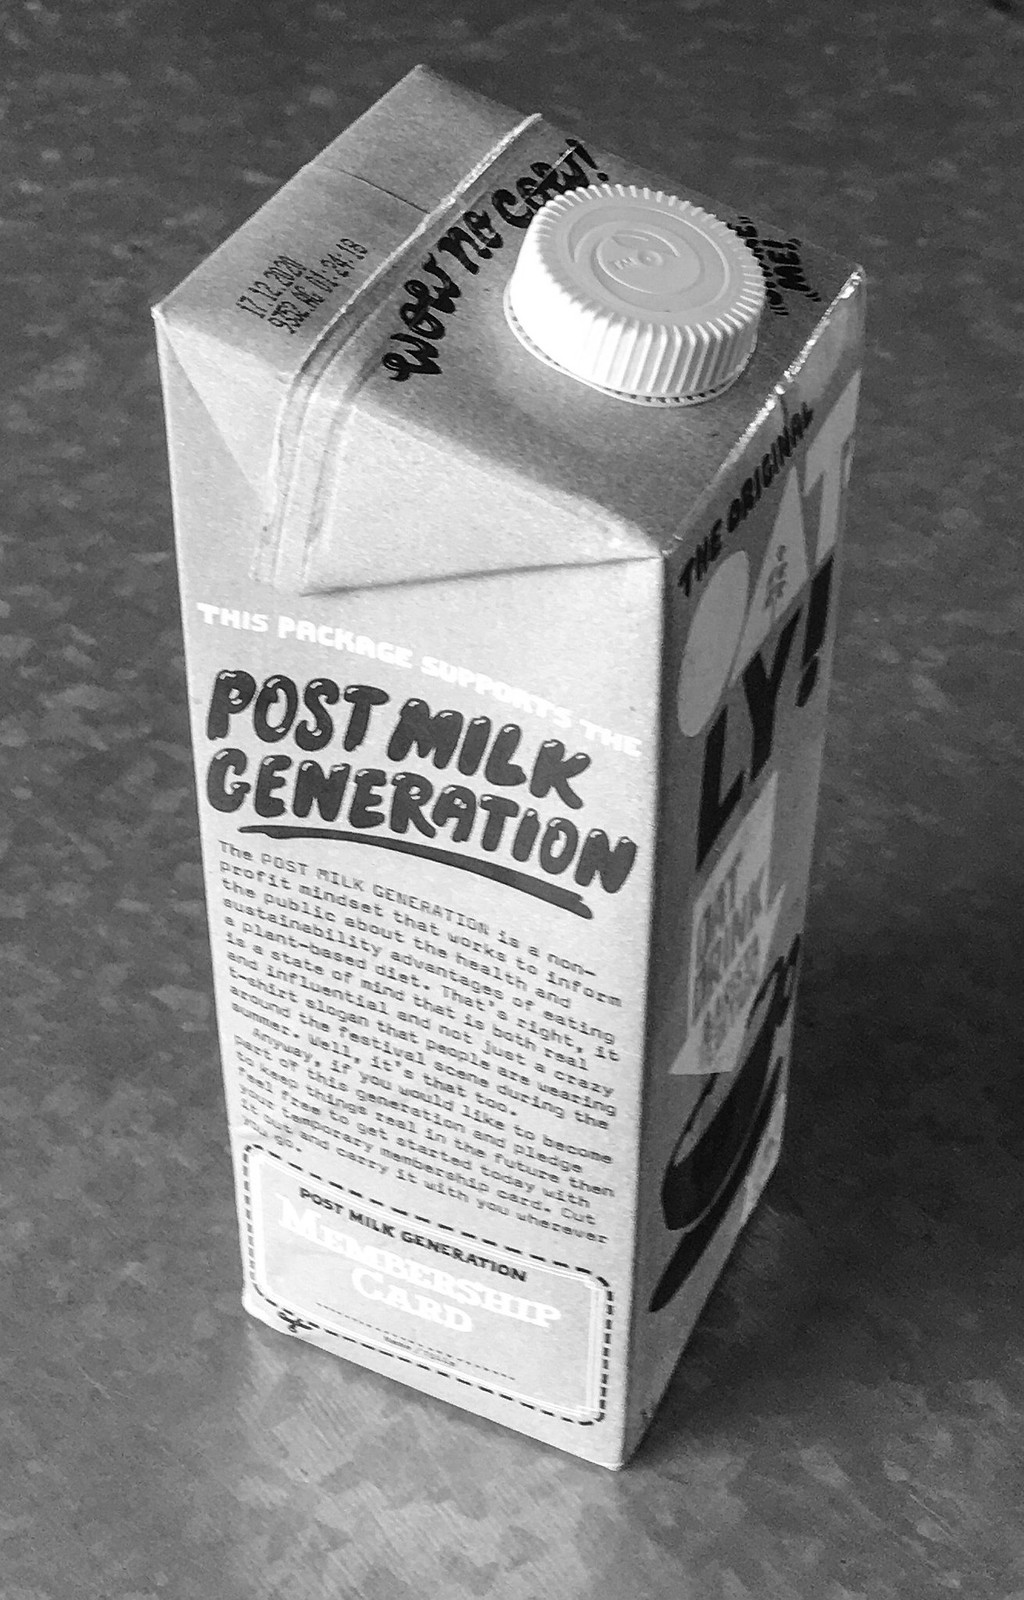 Post milk generation